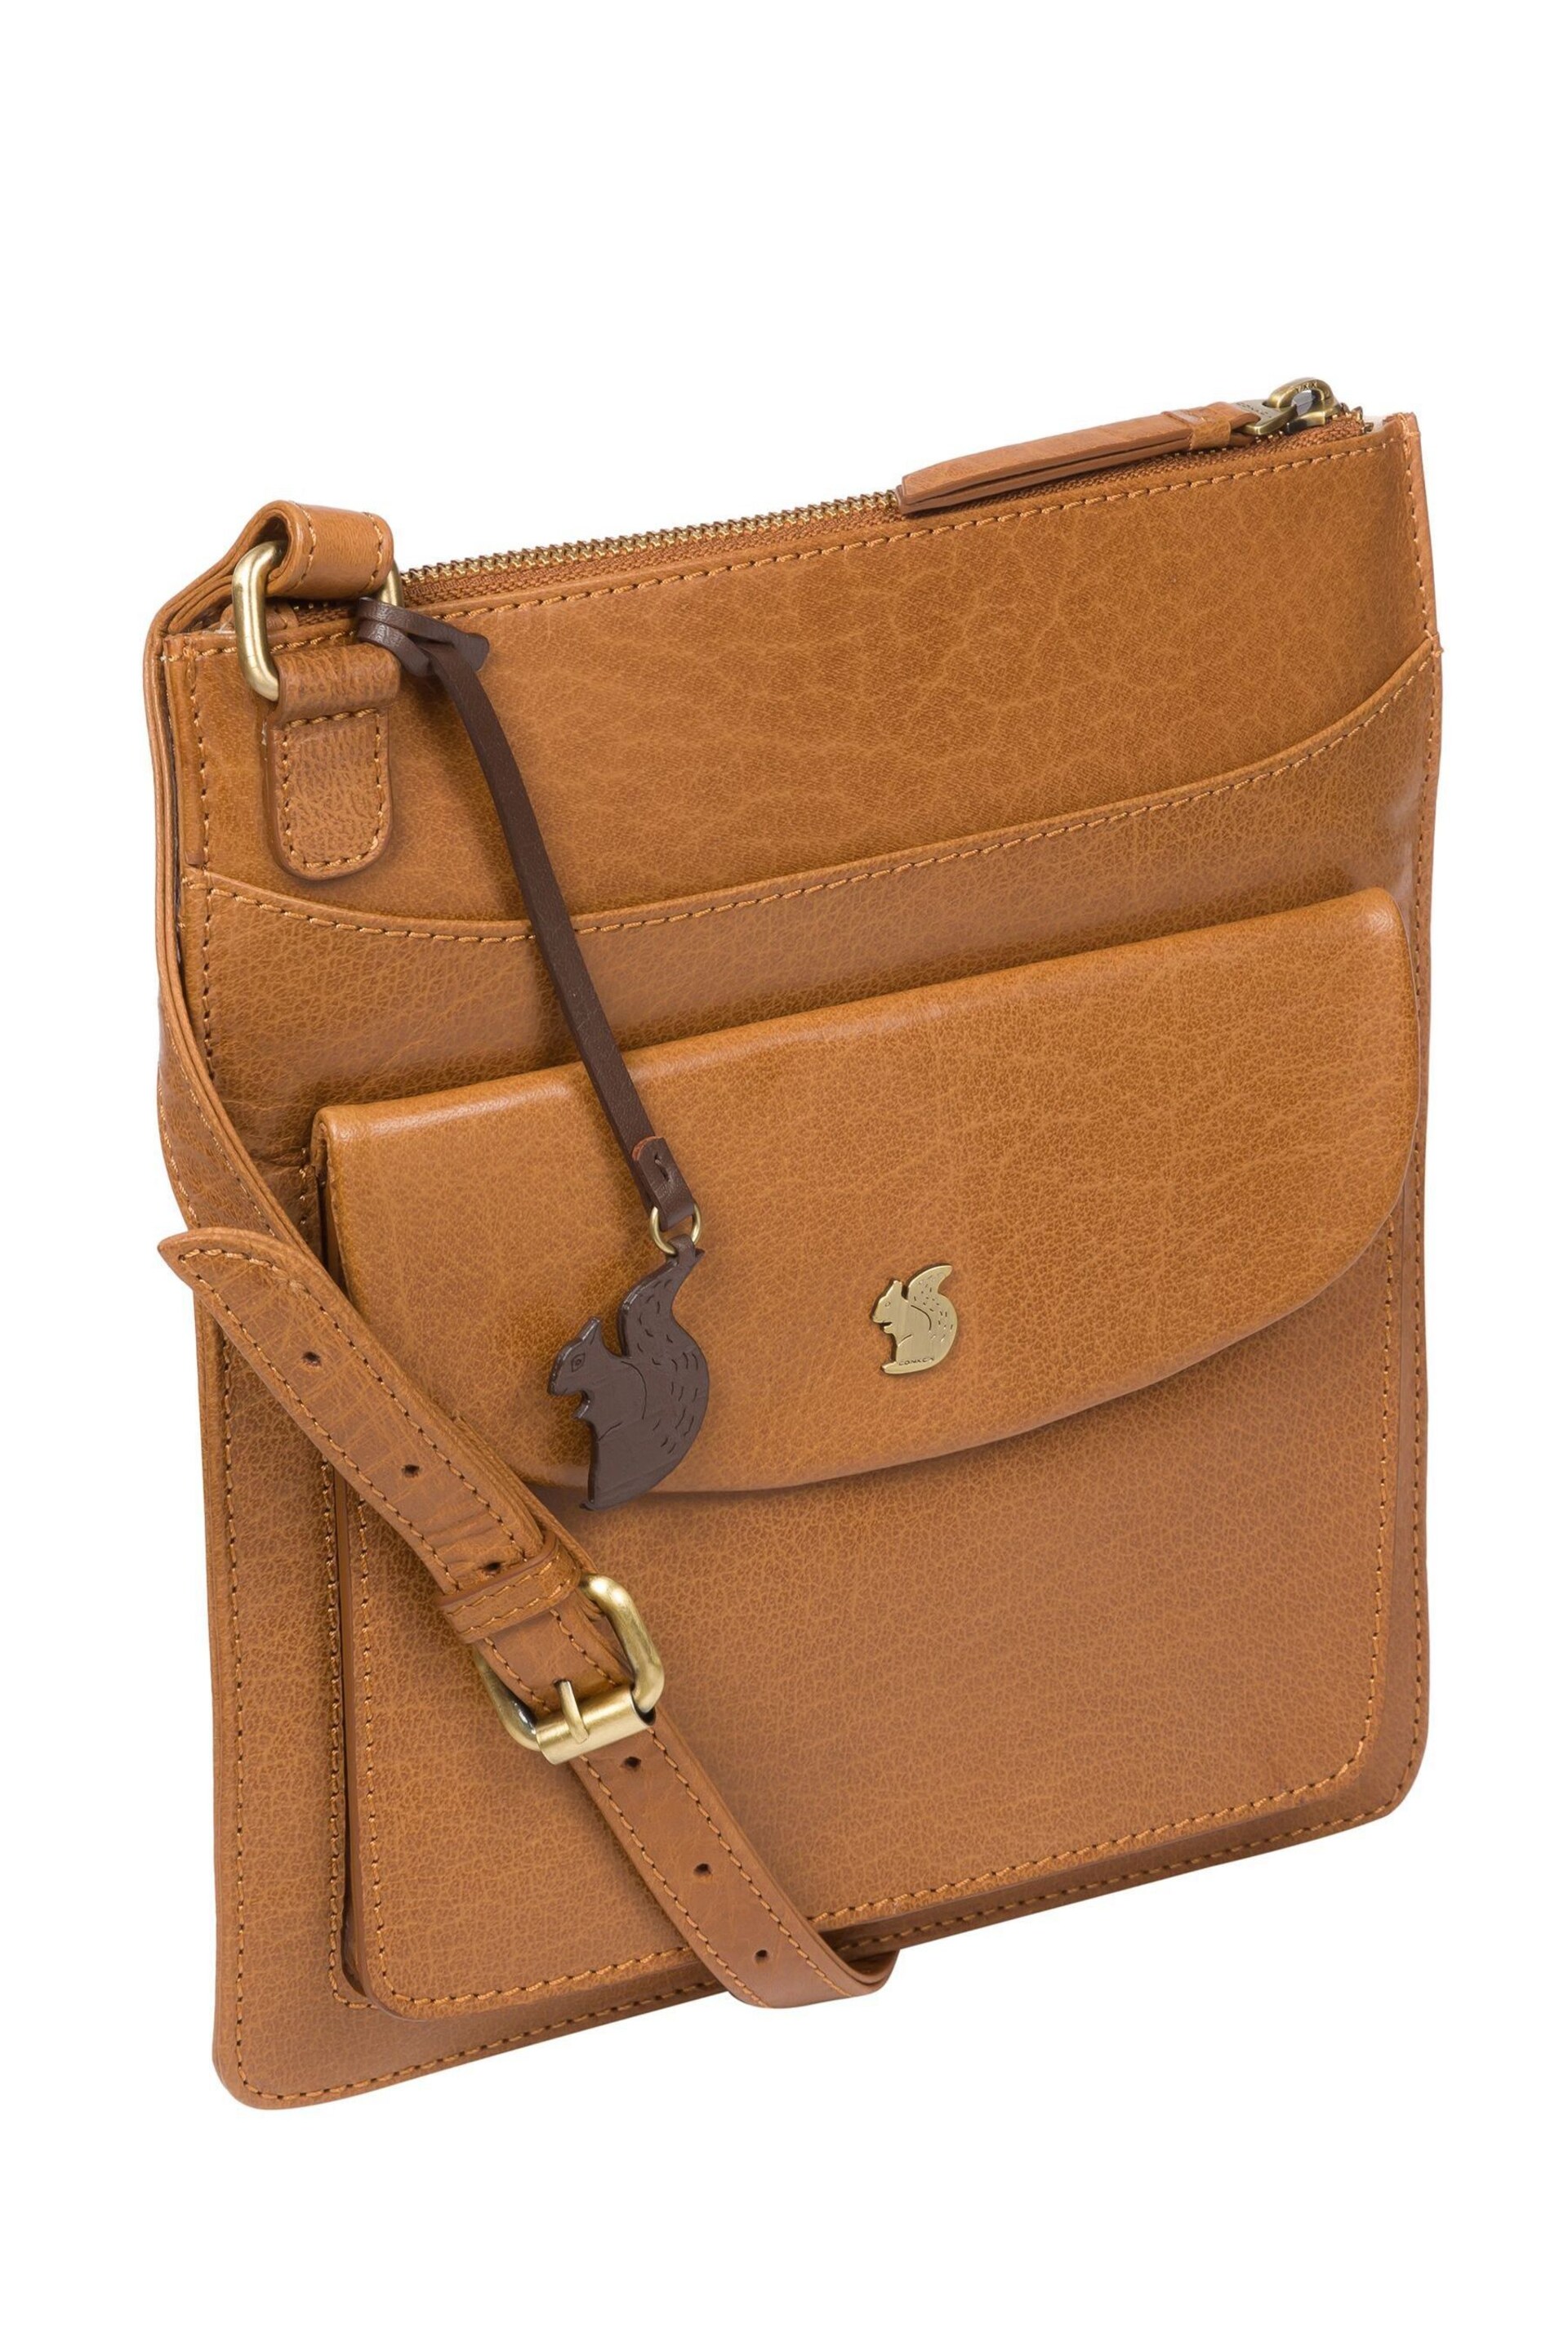 Conkca Lauryn Leather Cross-Body Bag - Image 3 of 6